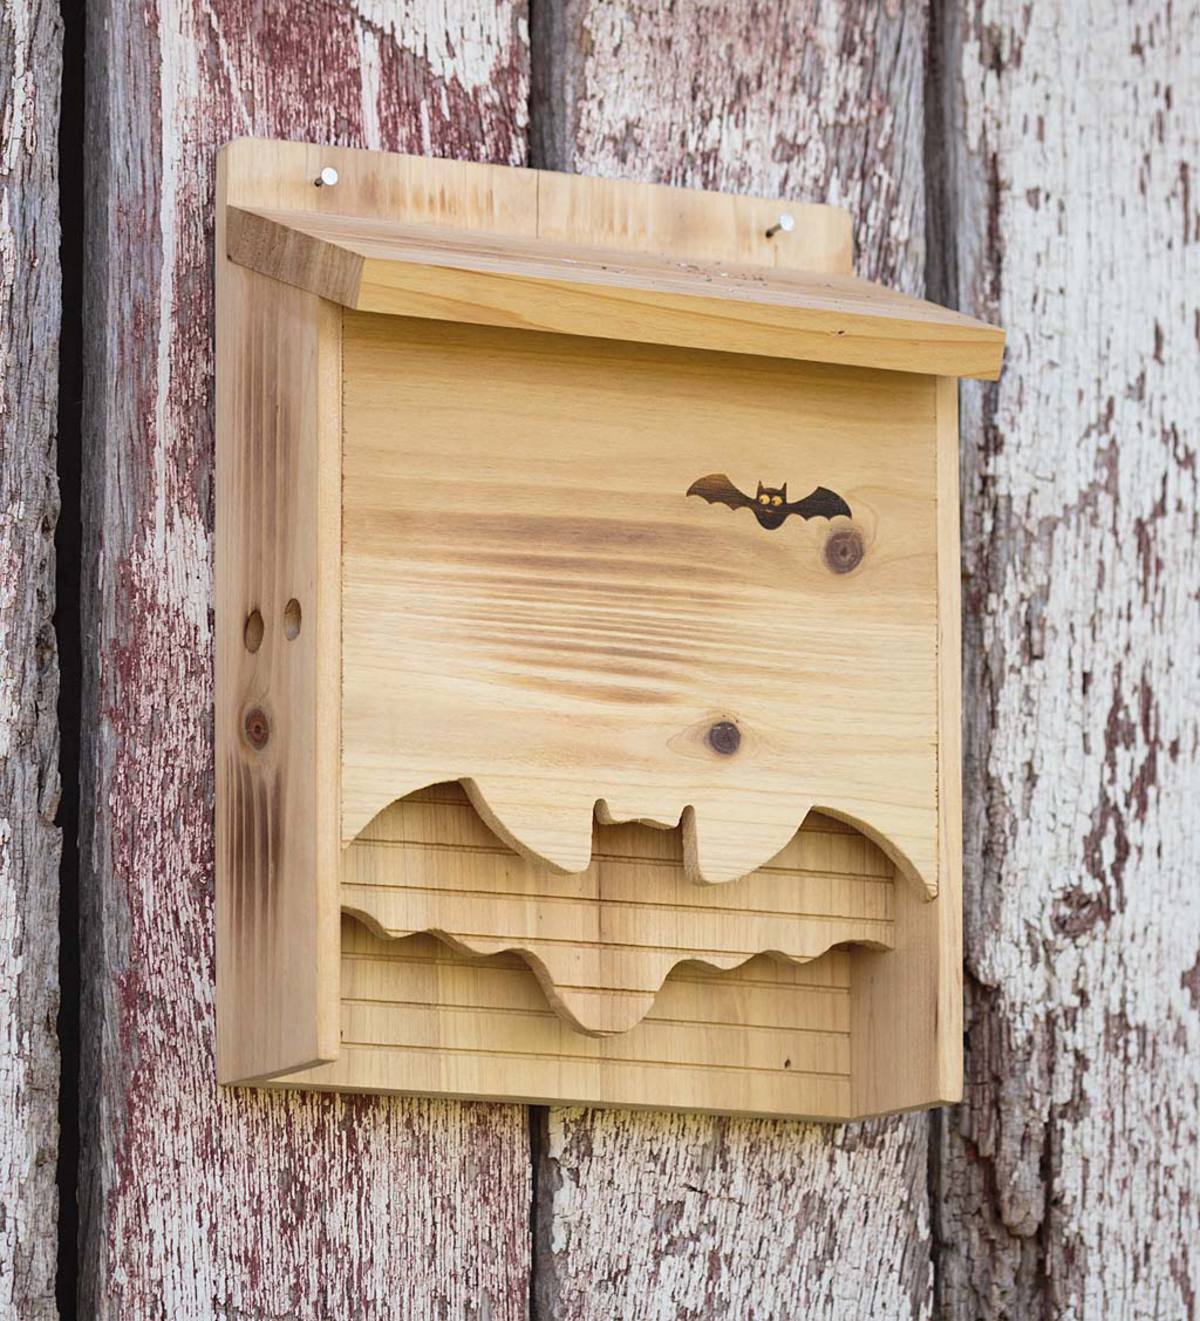 Small Wood Bat House